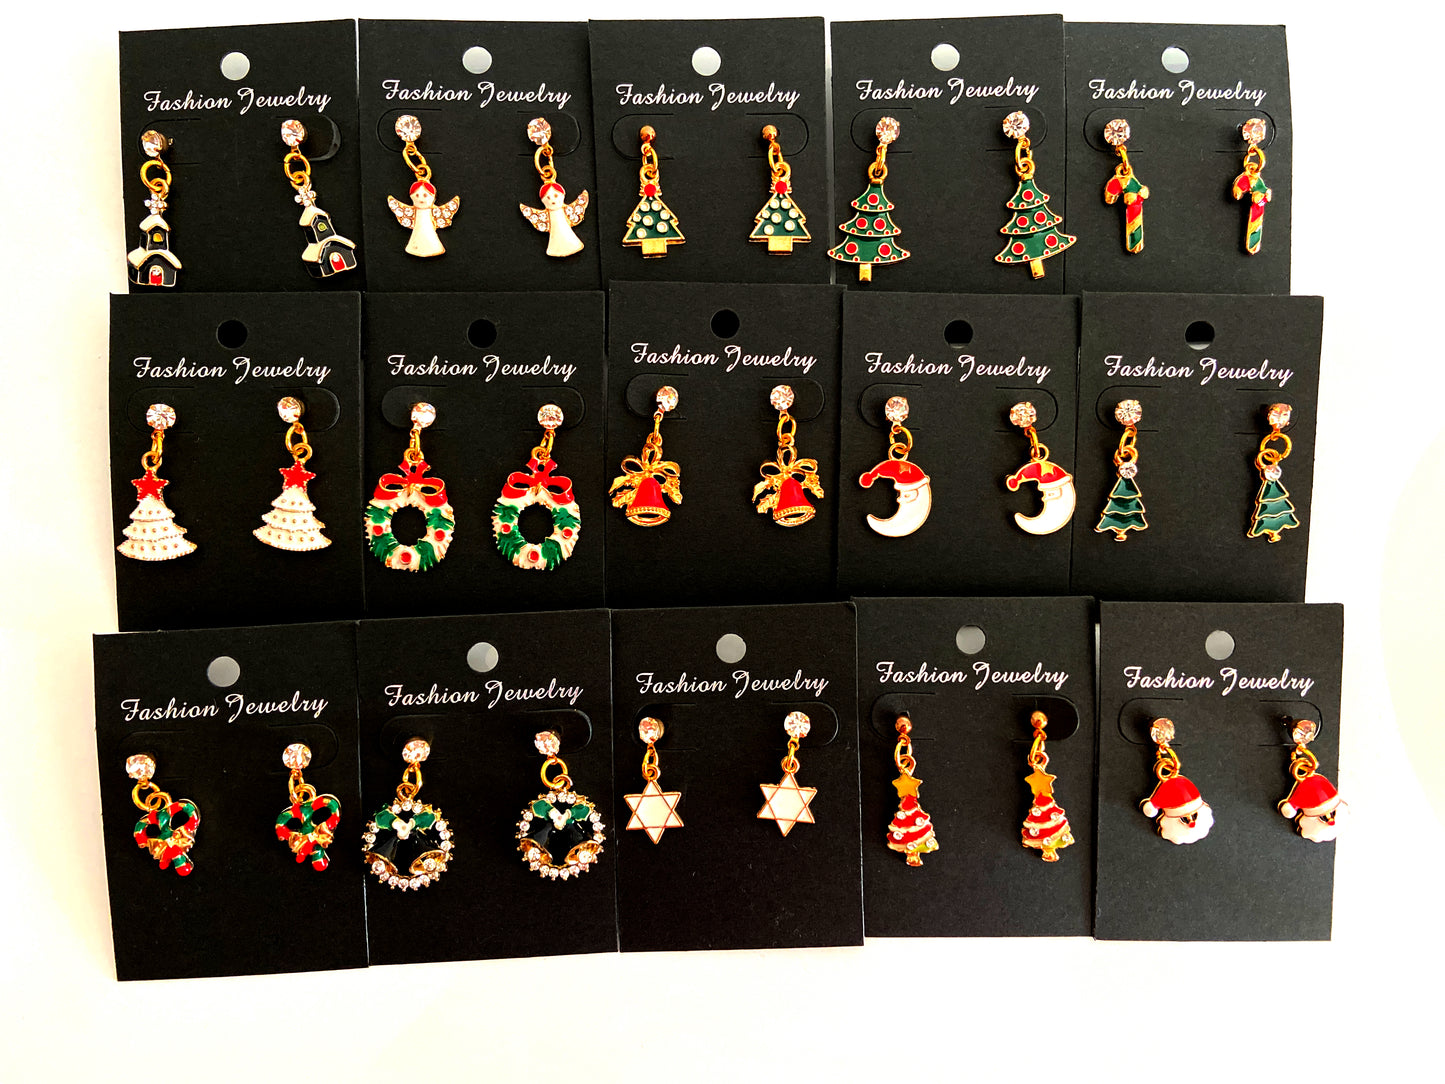 12 days of Christmas earrings